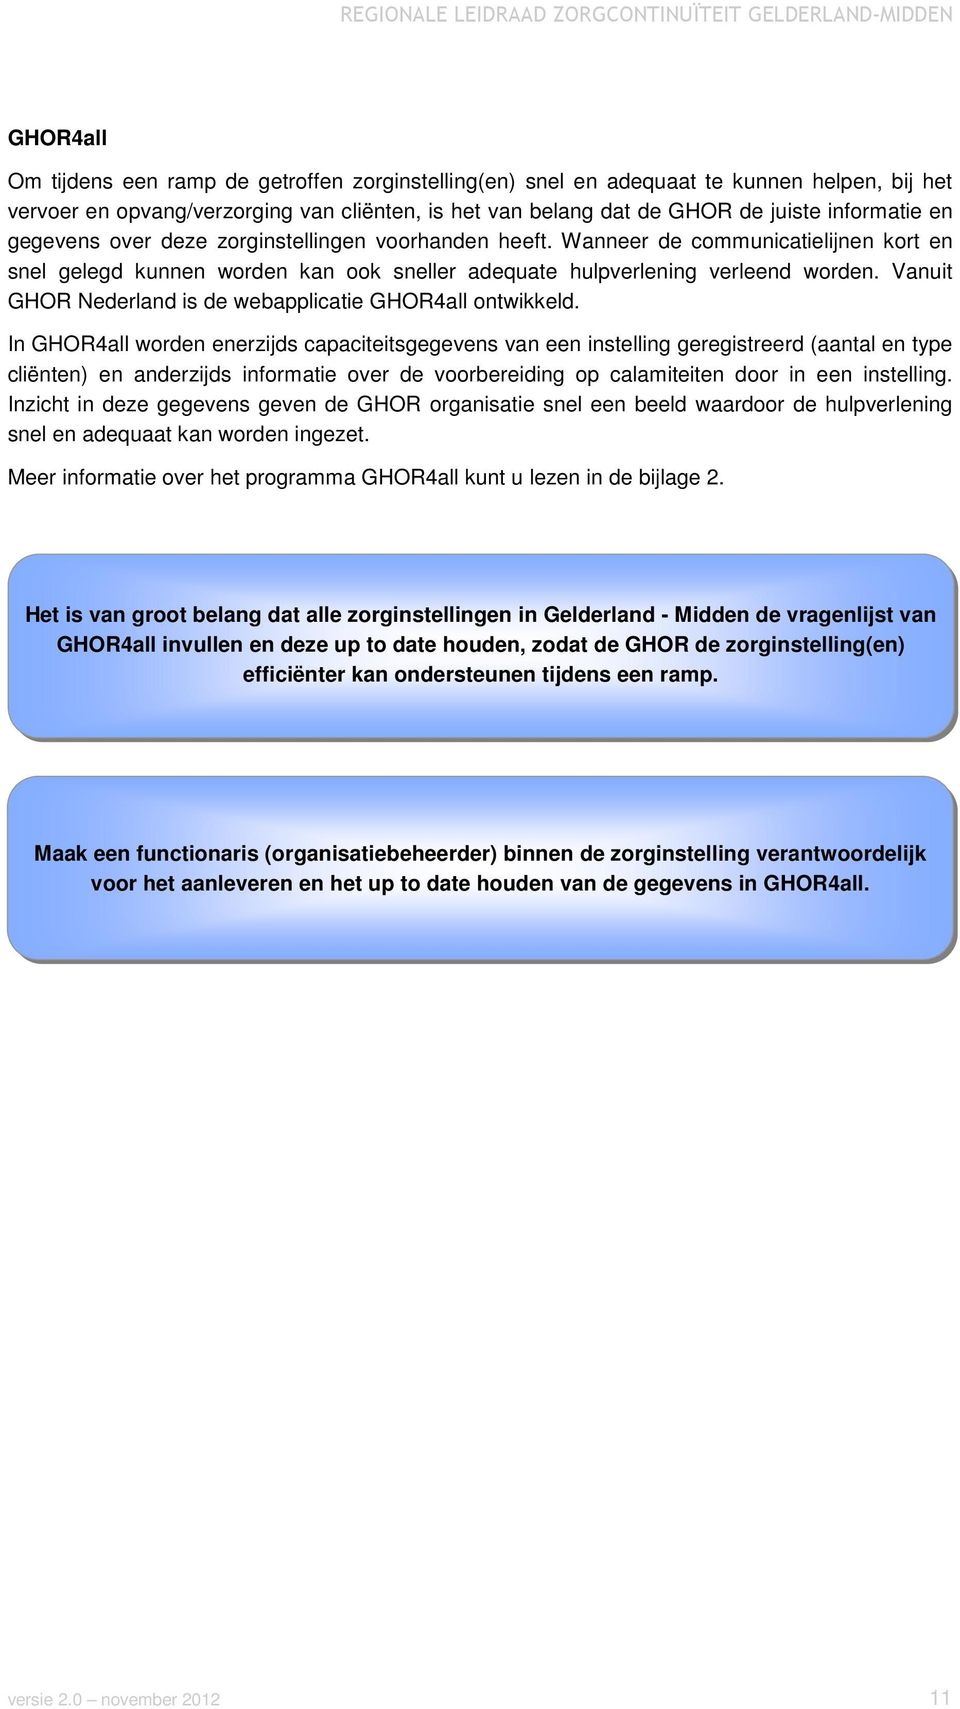 Vanuit GHOR Nederland is de webapplicatie GHOR4all ntwikkeld.